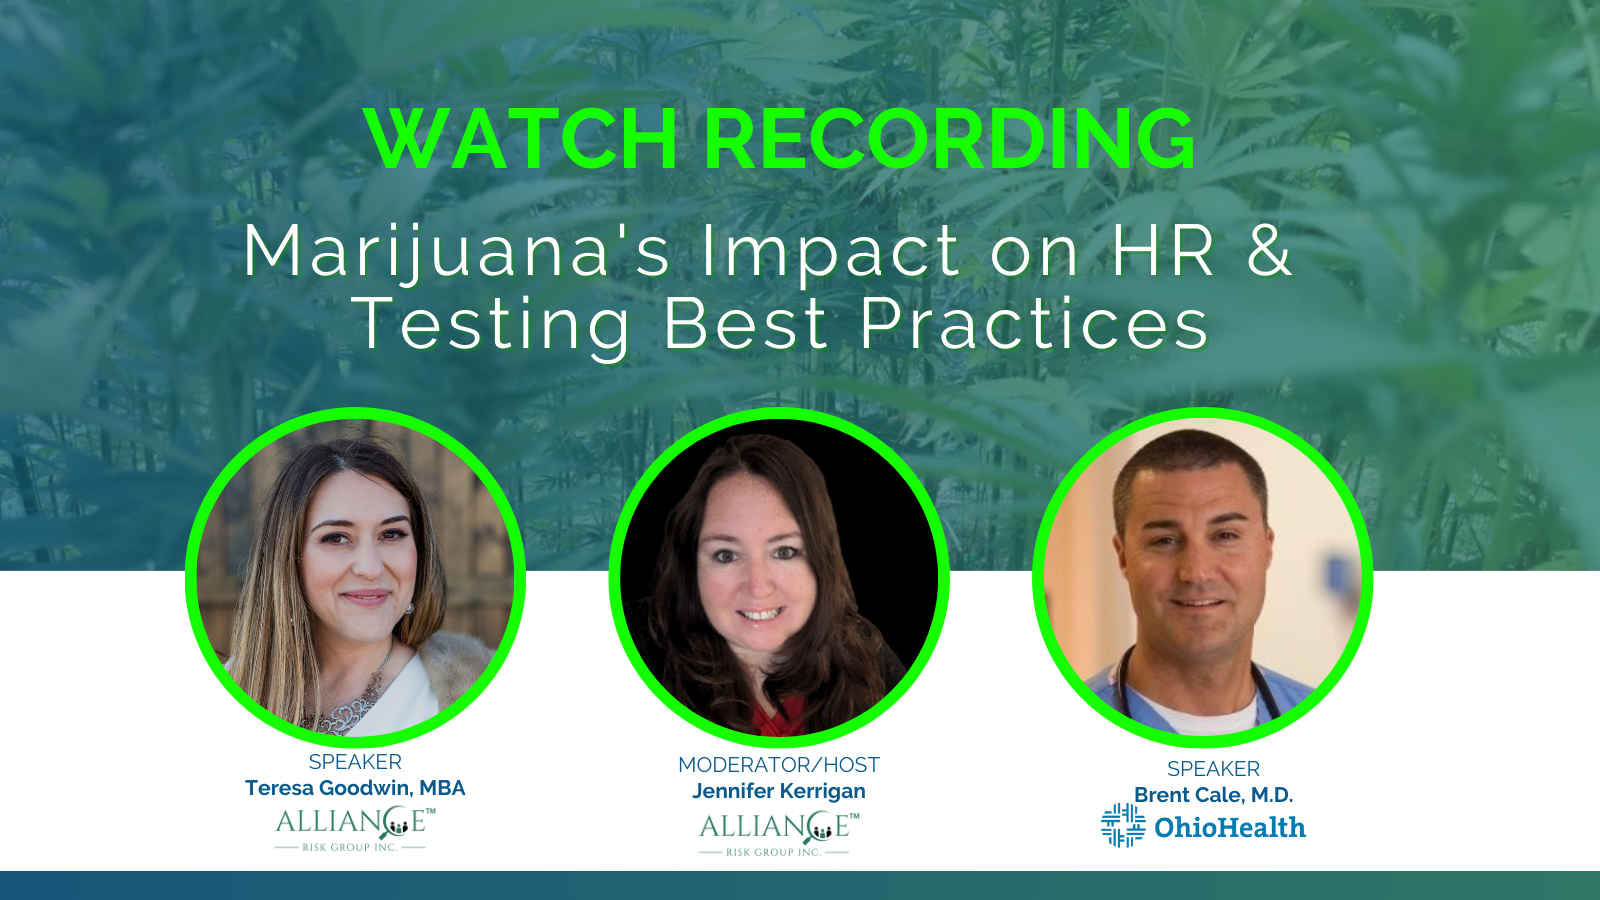 HR Best Practices: Testing for Marijuana